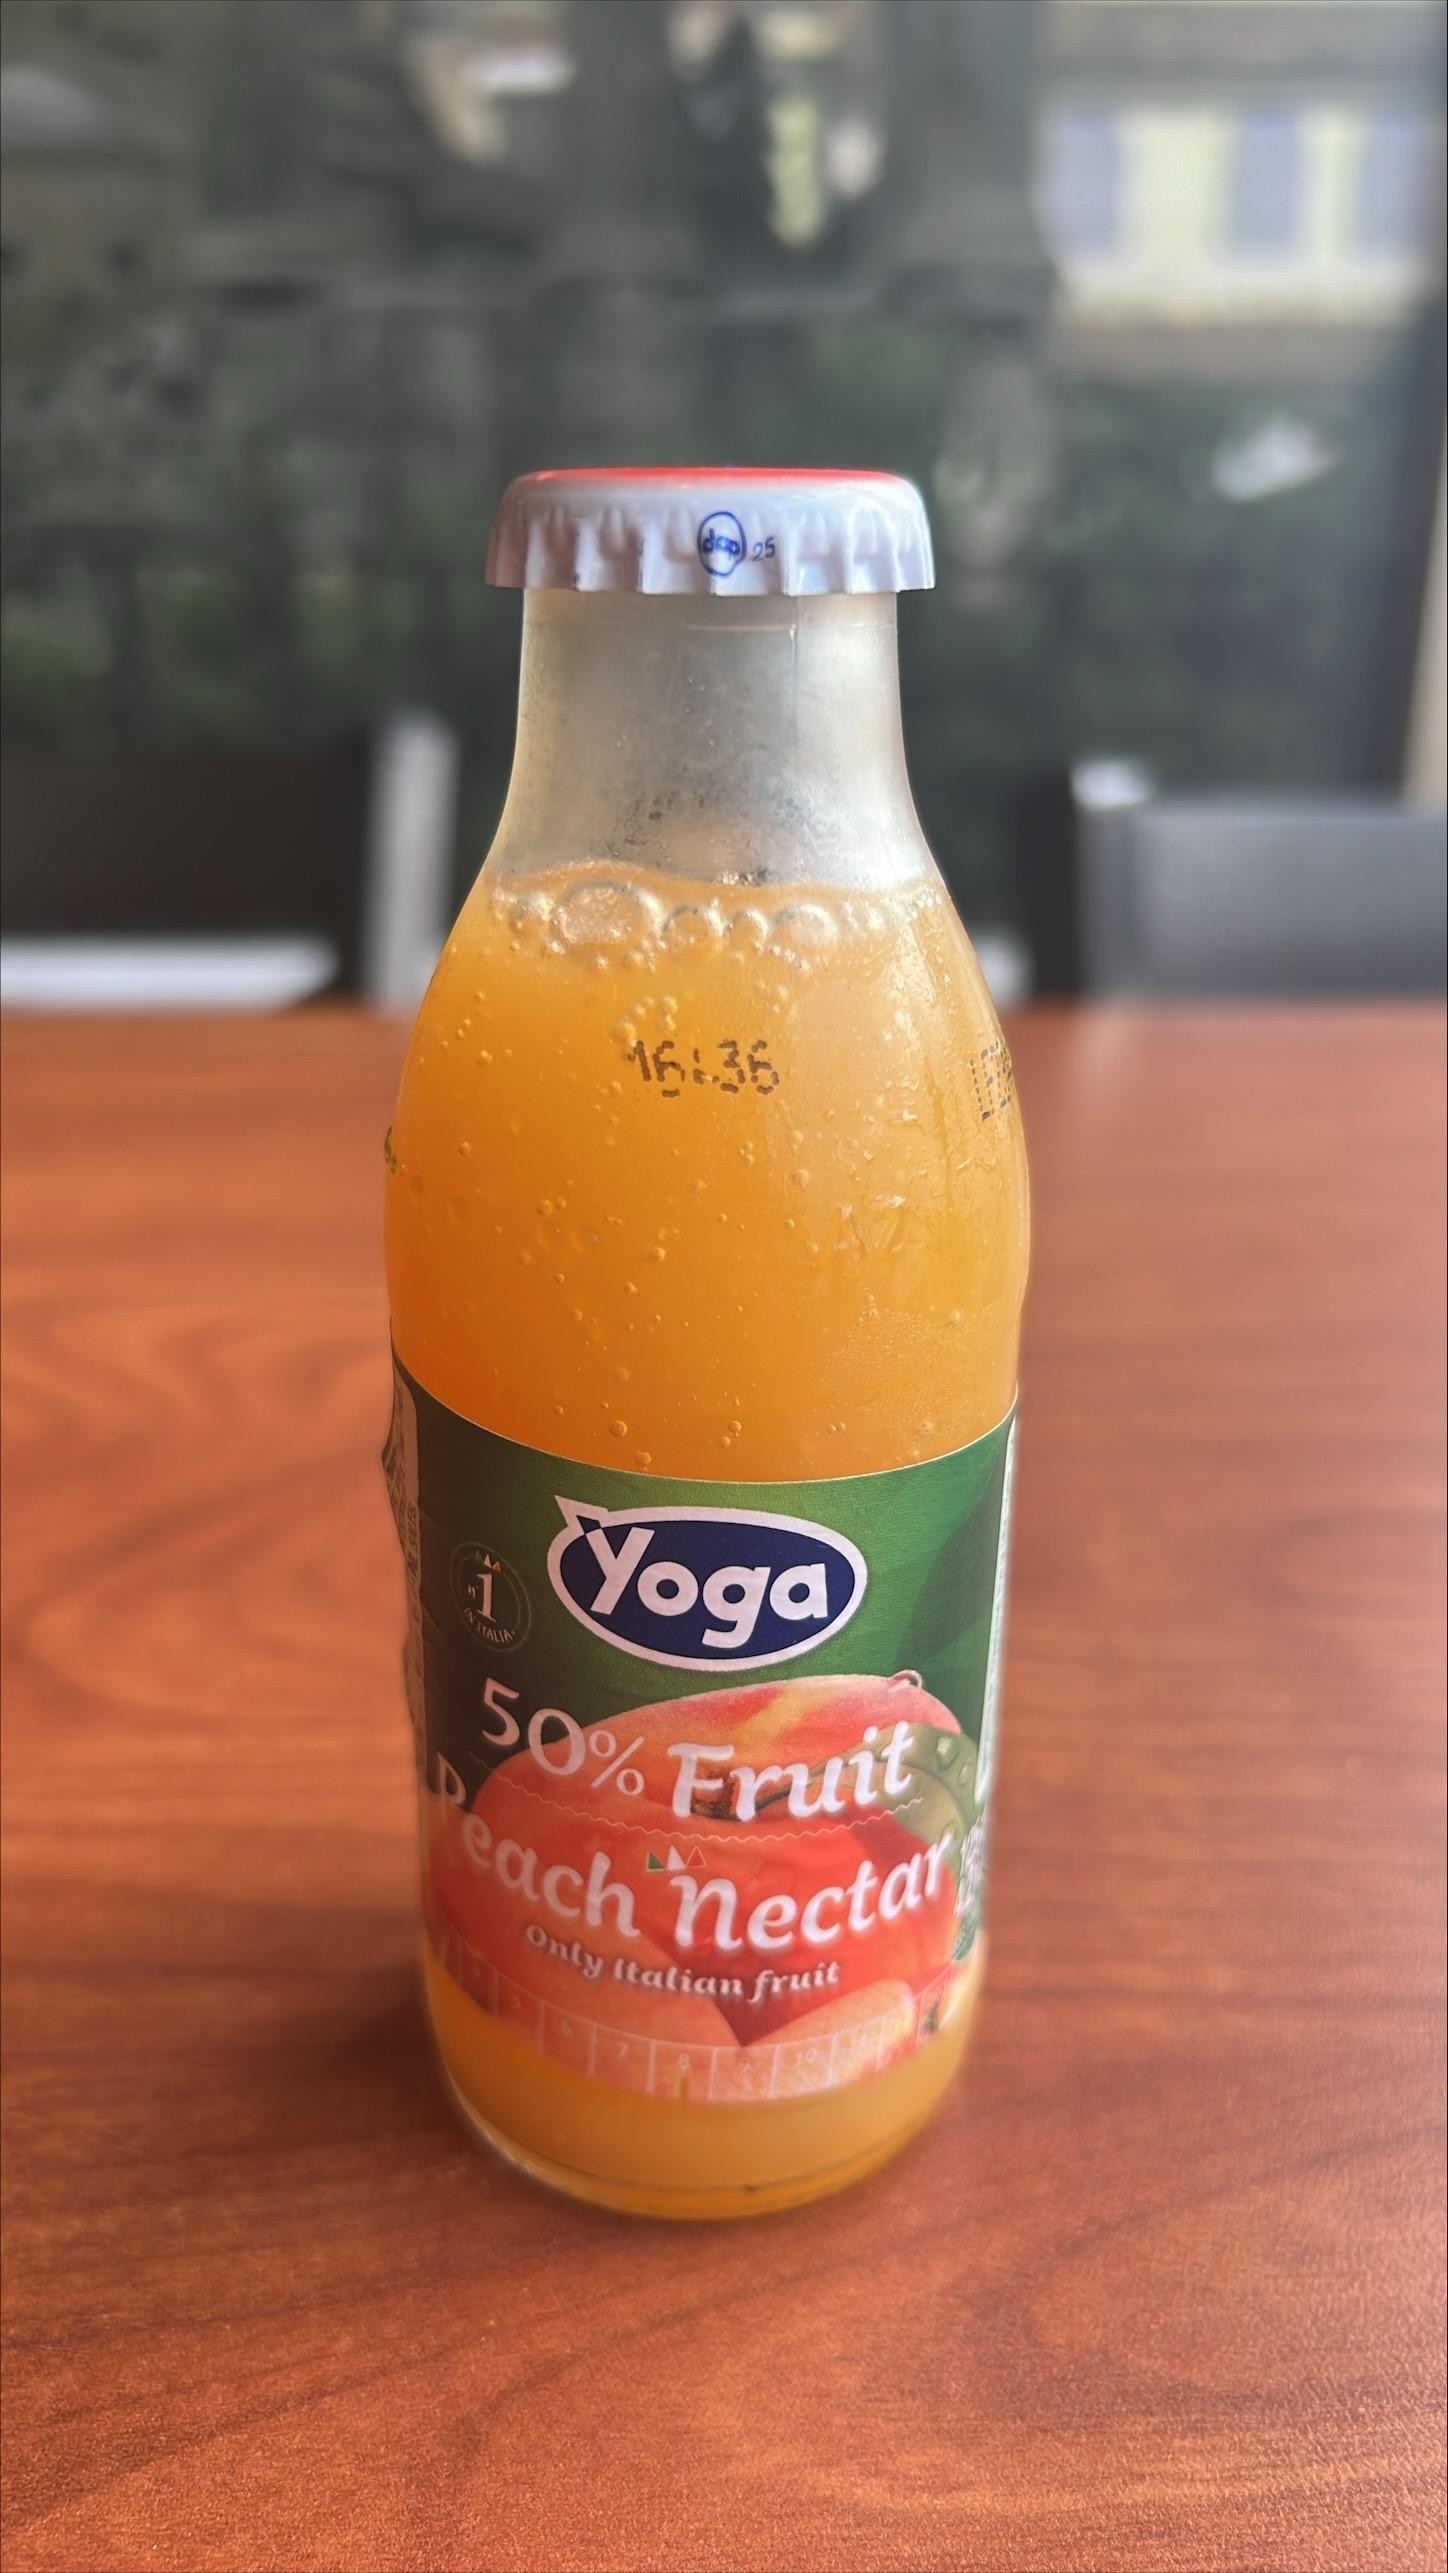 Yoga Peach Nectar